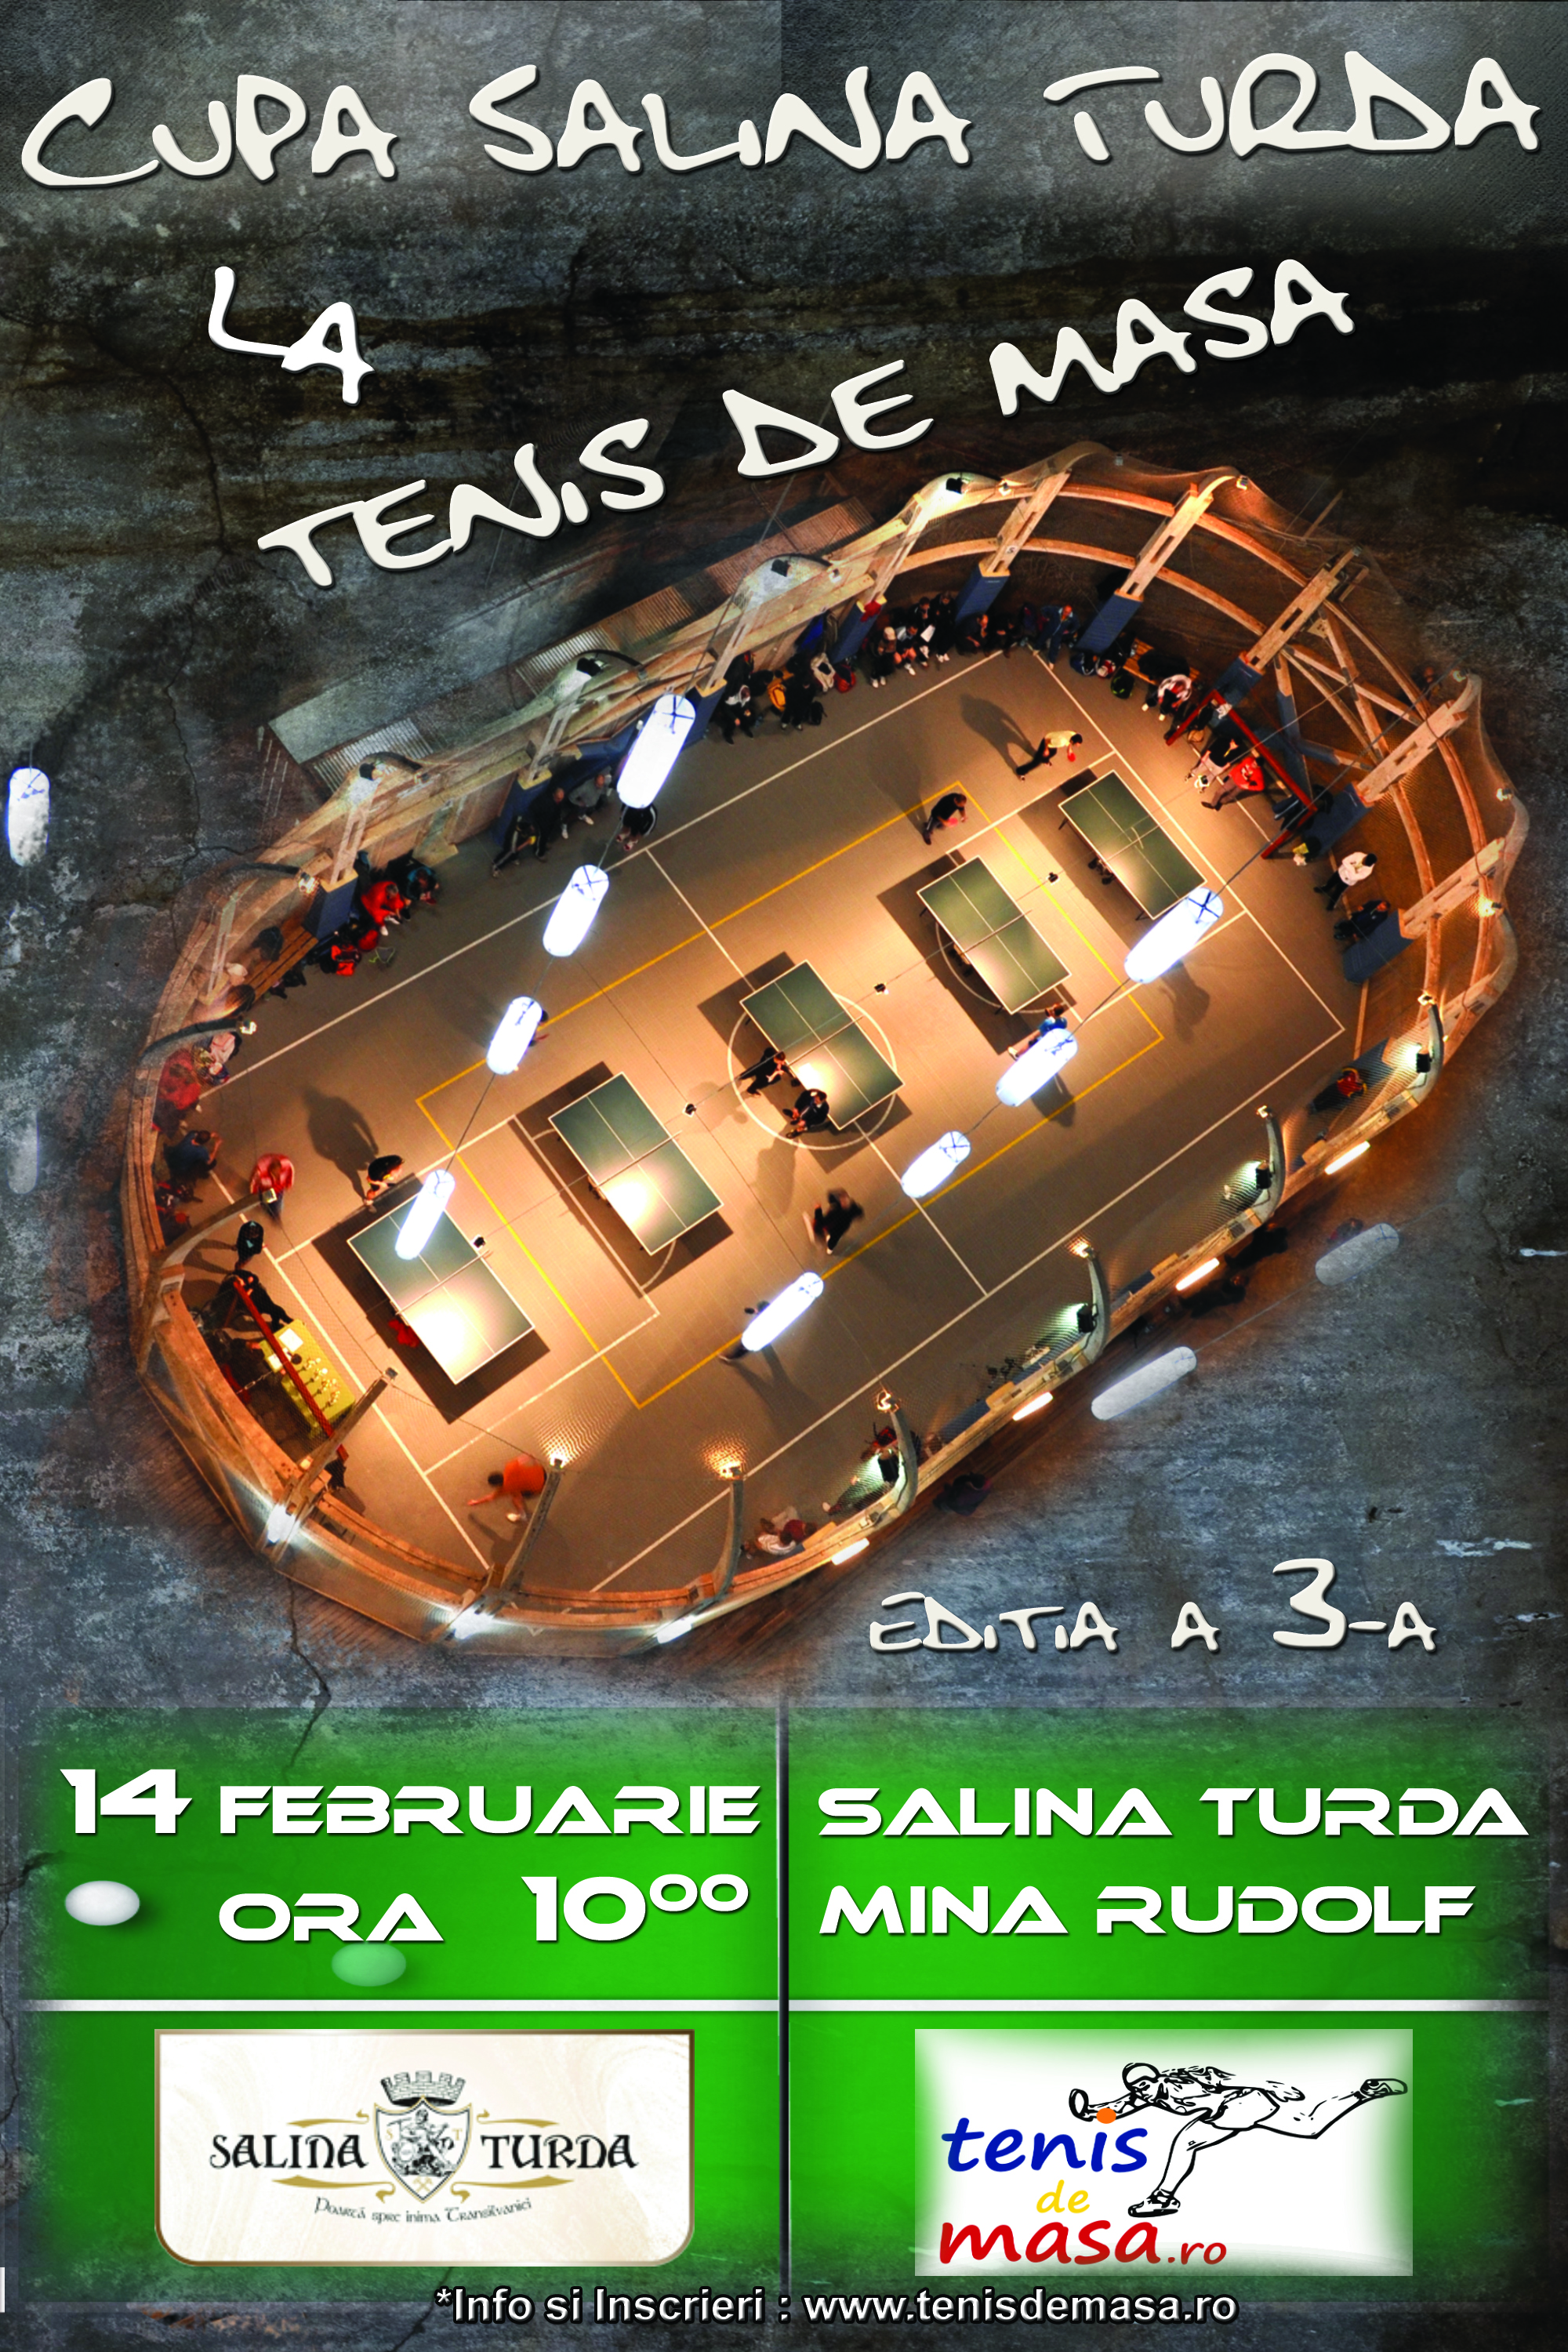 Cupa Salina Turda – tenis de masa, editia a III-a.